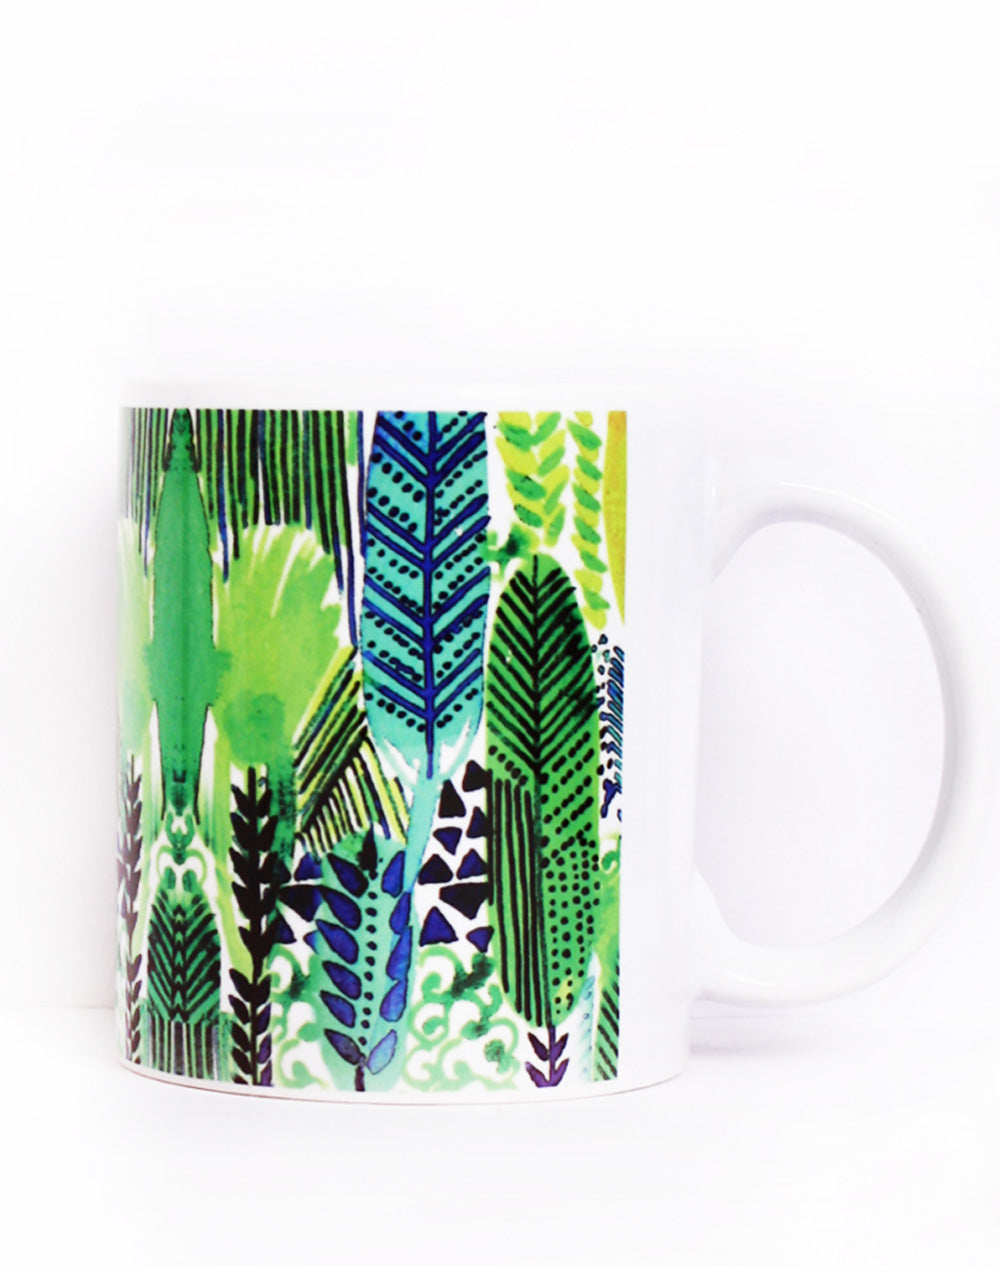 Green Leaves Coffee Mug